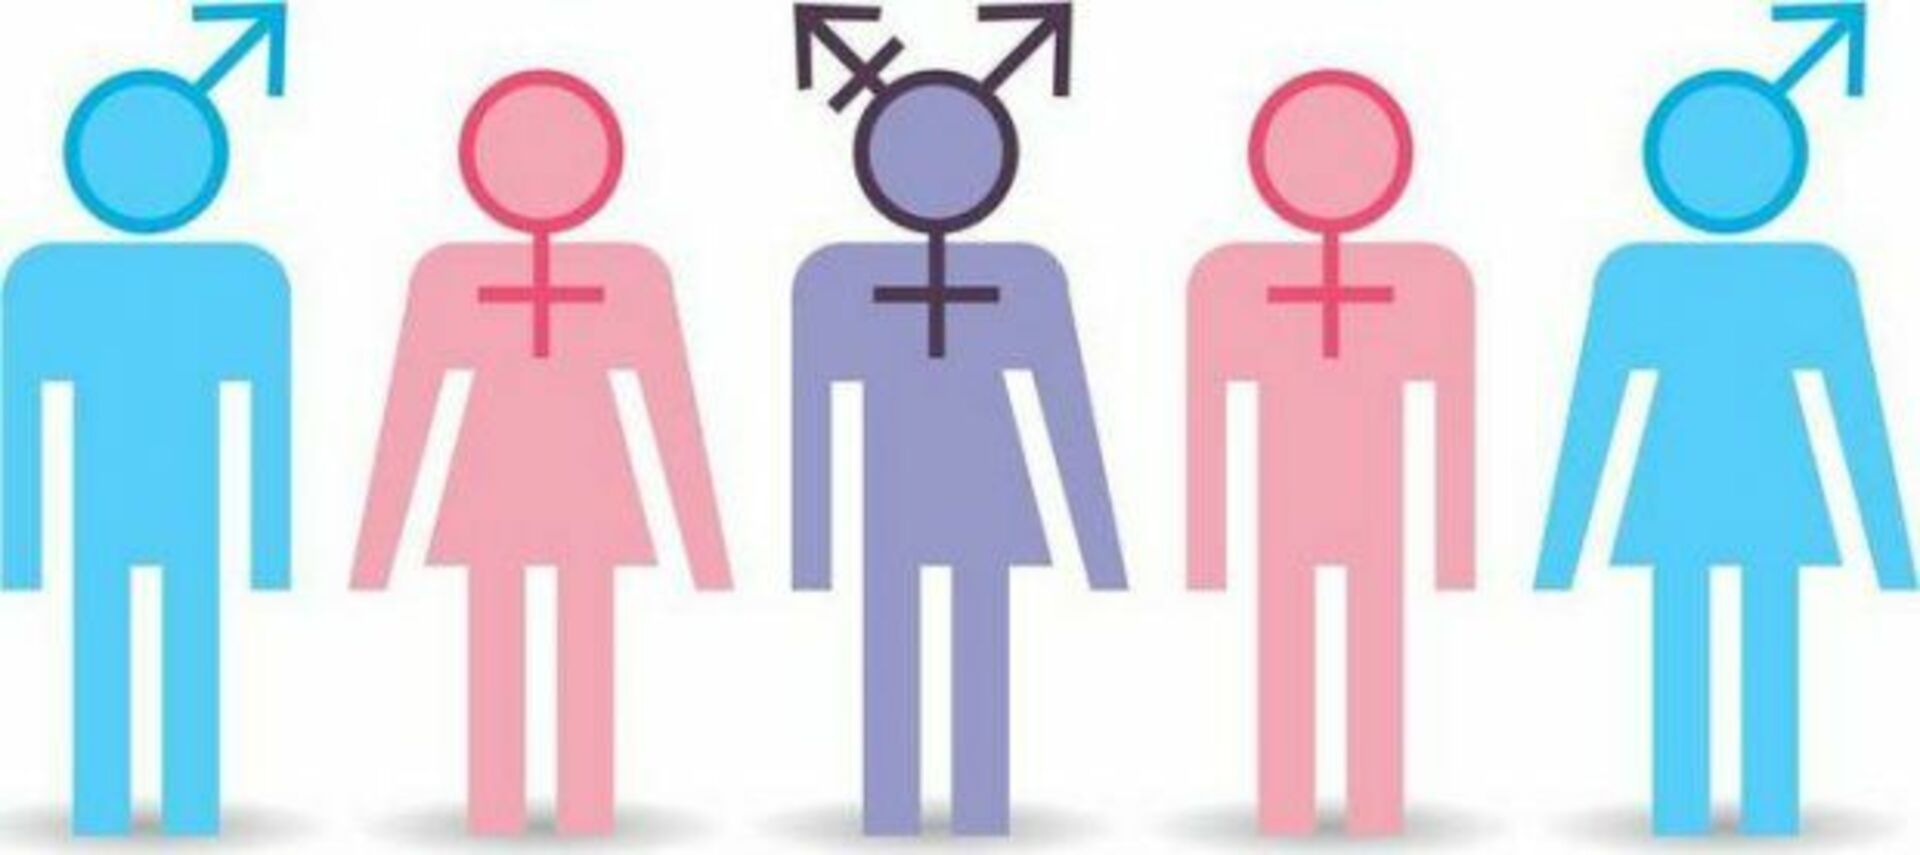 Дискриминация члена. Гендер. Пол мужской и женский. Ориентация и гендерная идентичность. Мужской и женский гендер.